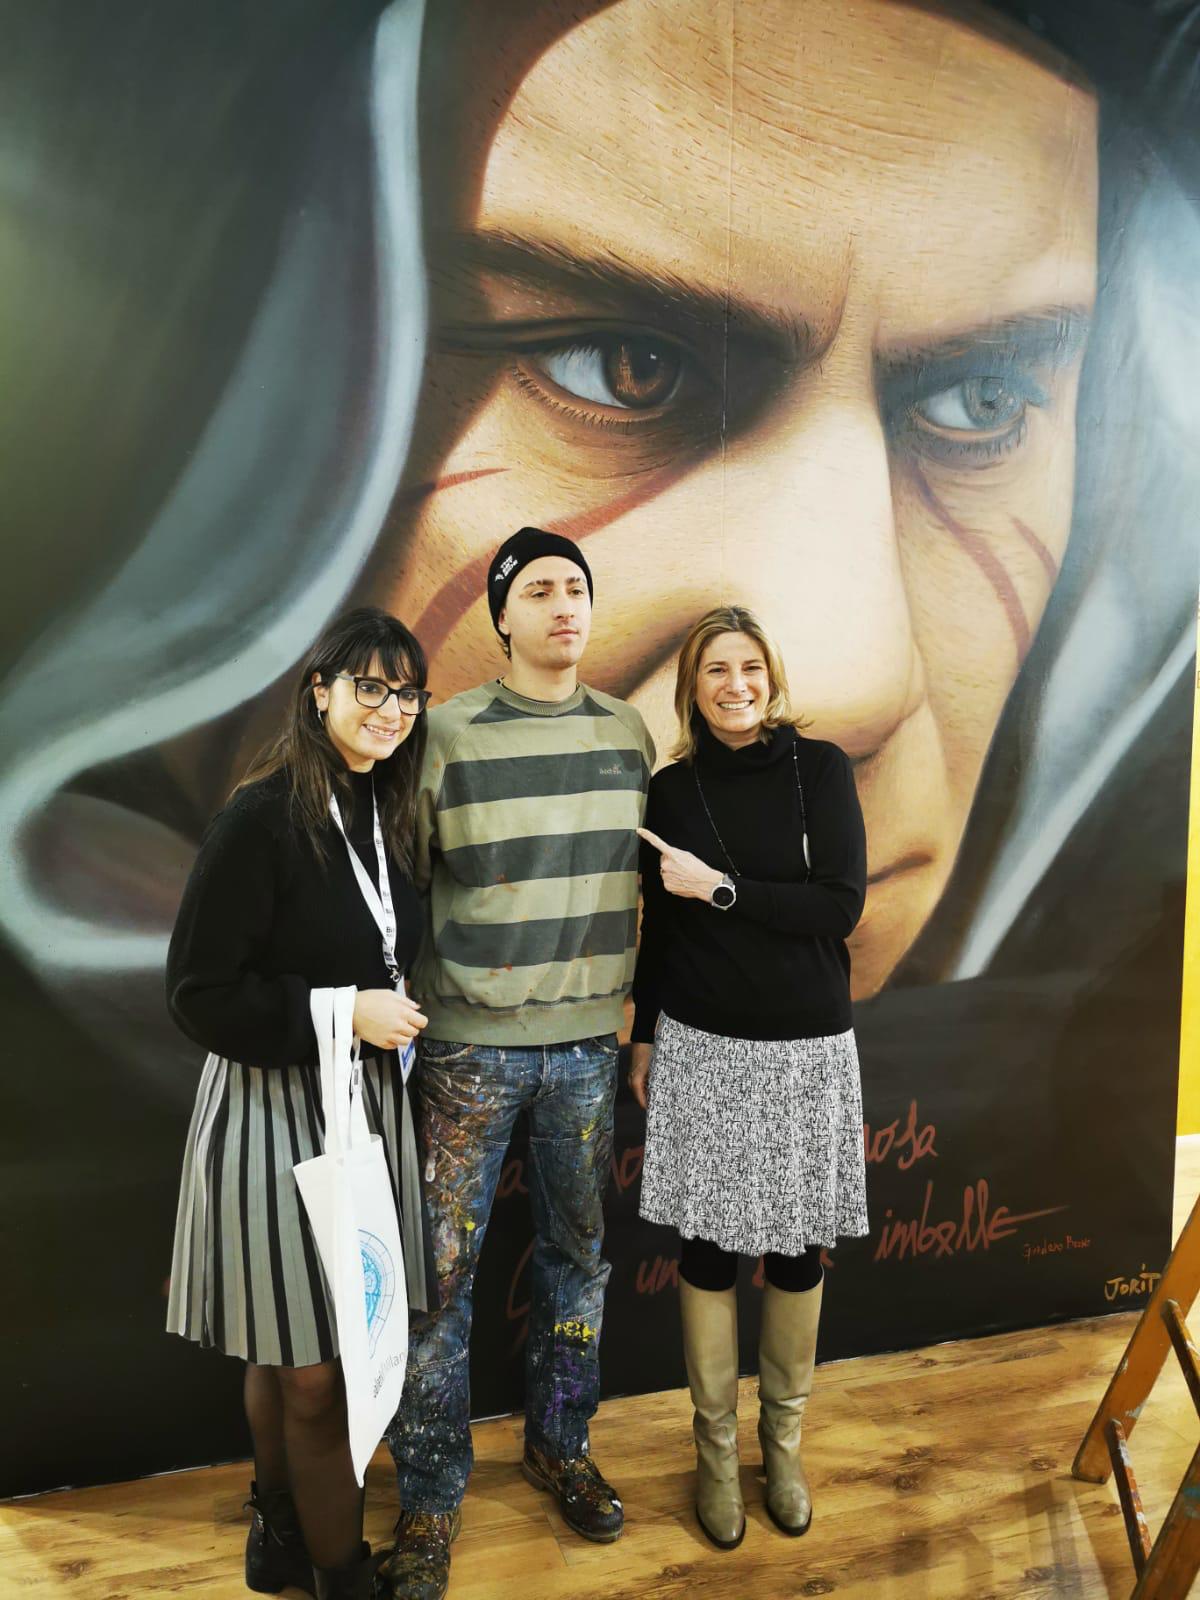 BIT. L’assessore de Majo consegna al Comune di Milano la tela dipinta da Jorit